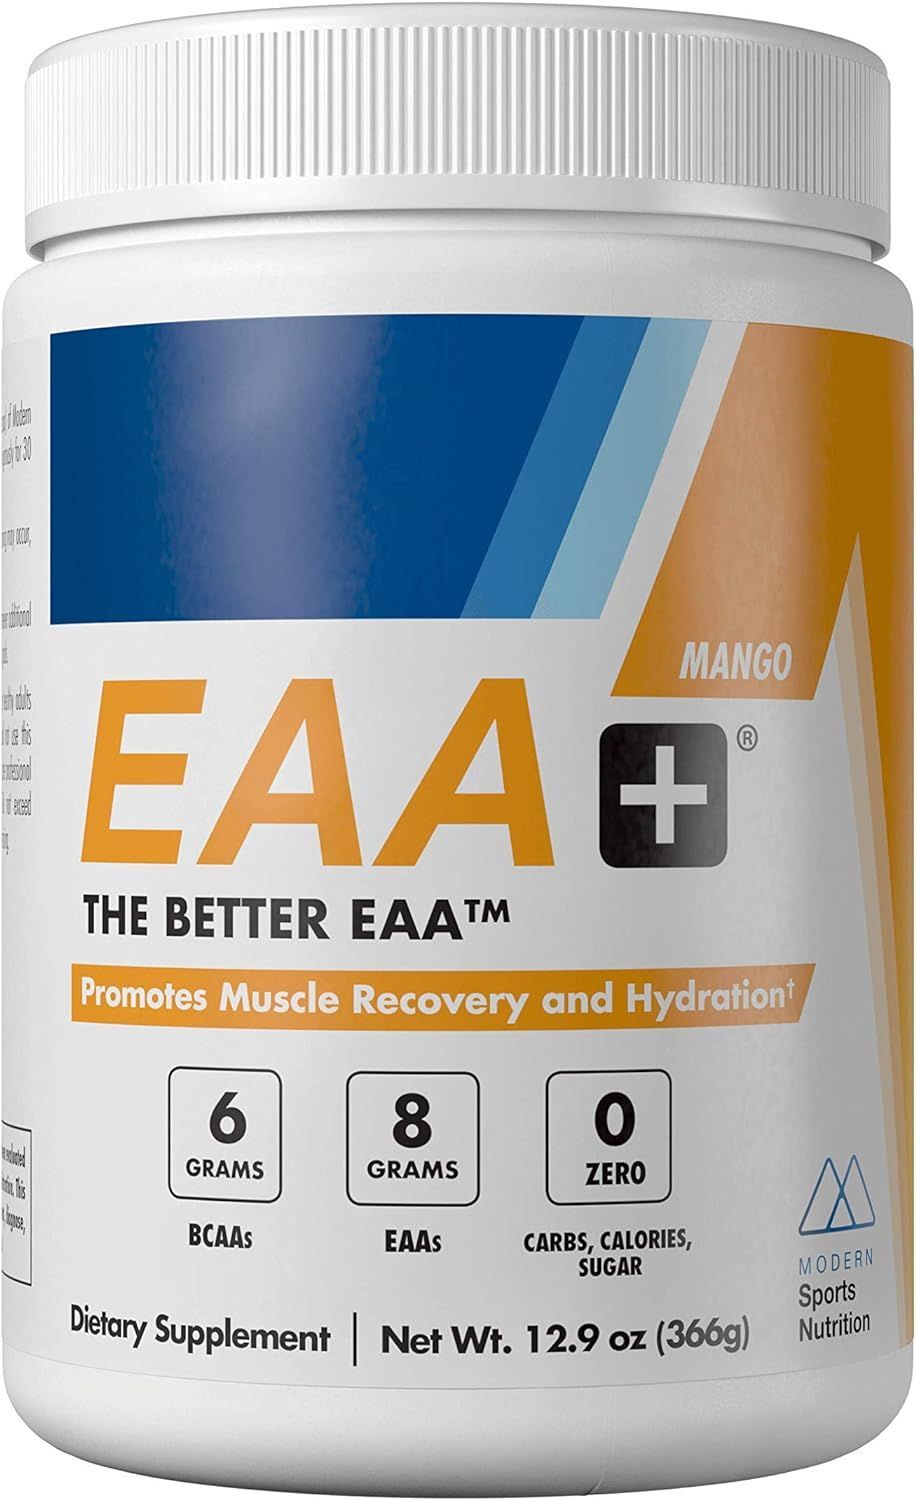 Modern's EAA+Essential Amino Acid Powder